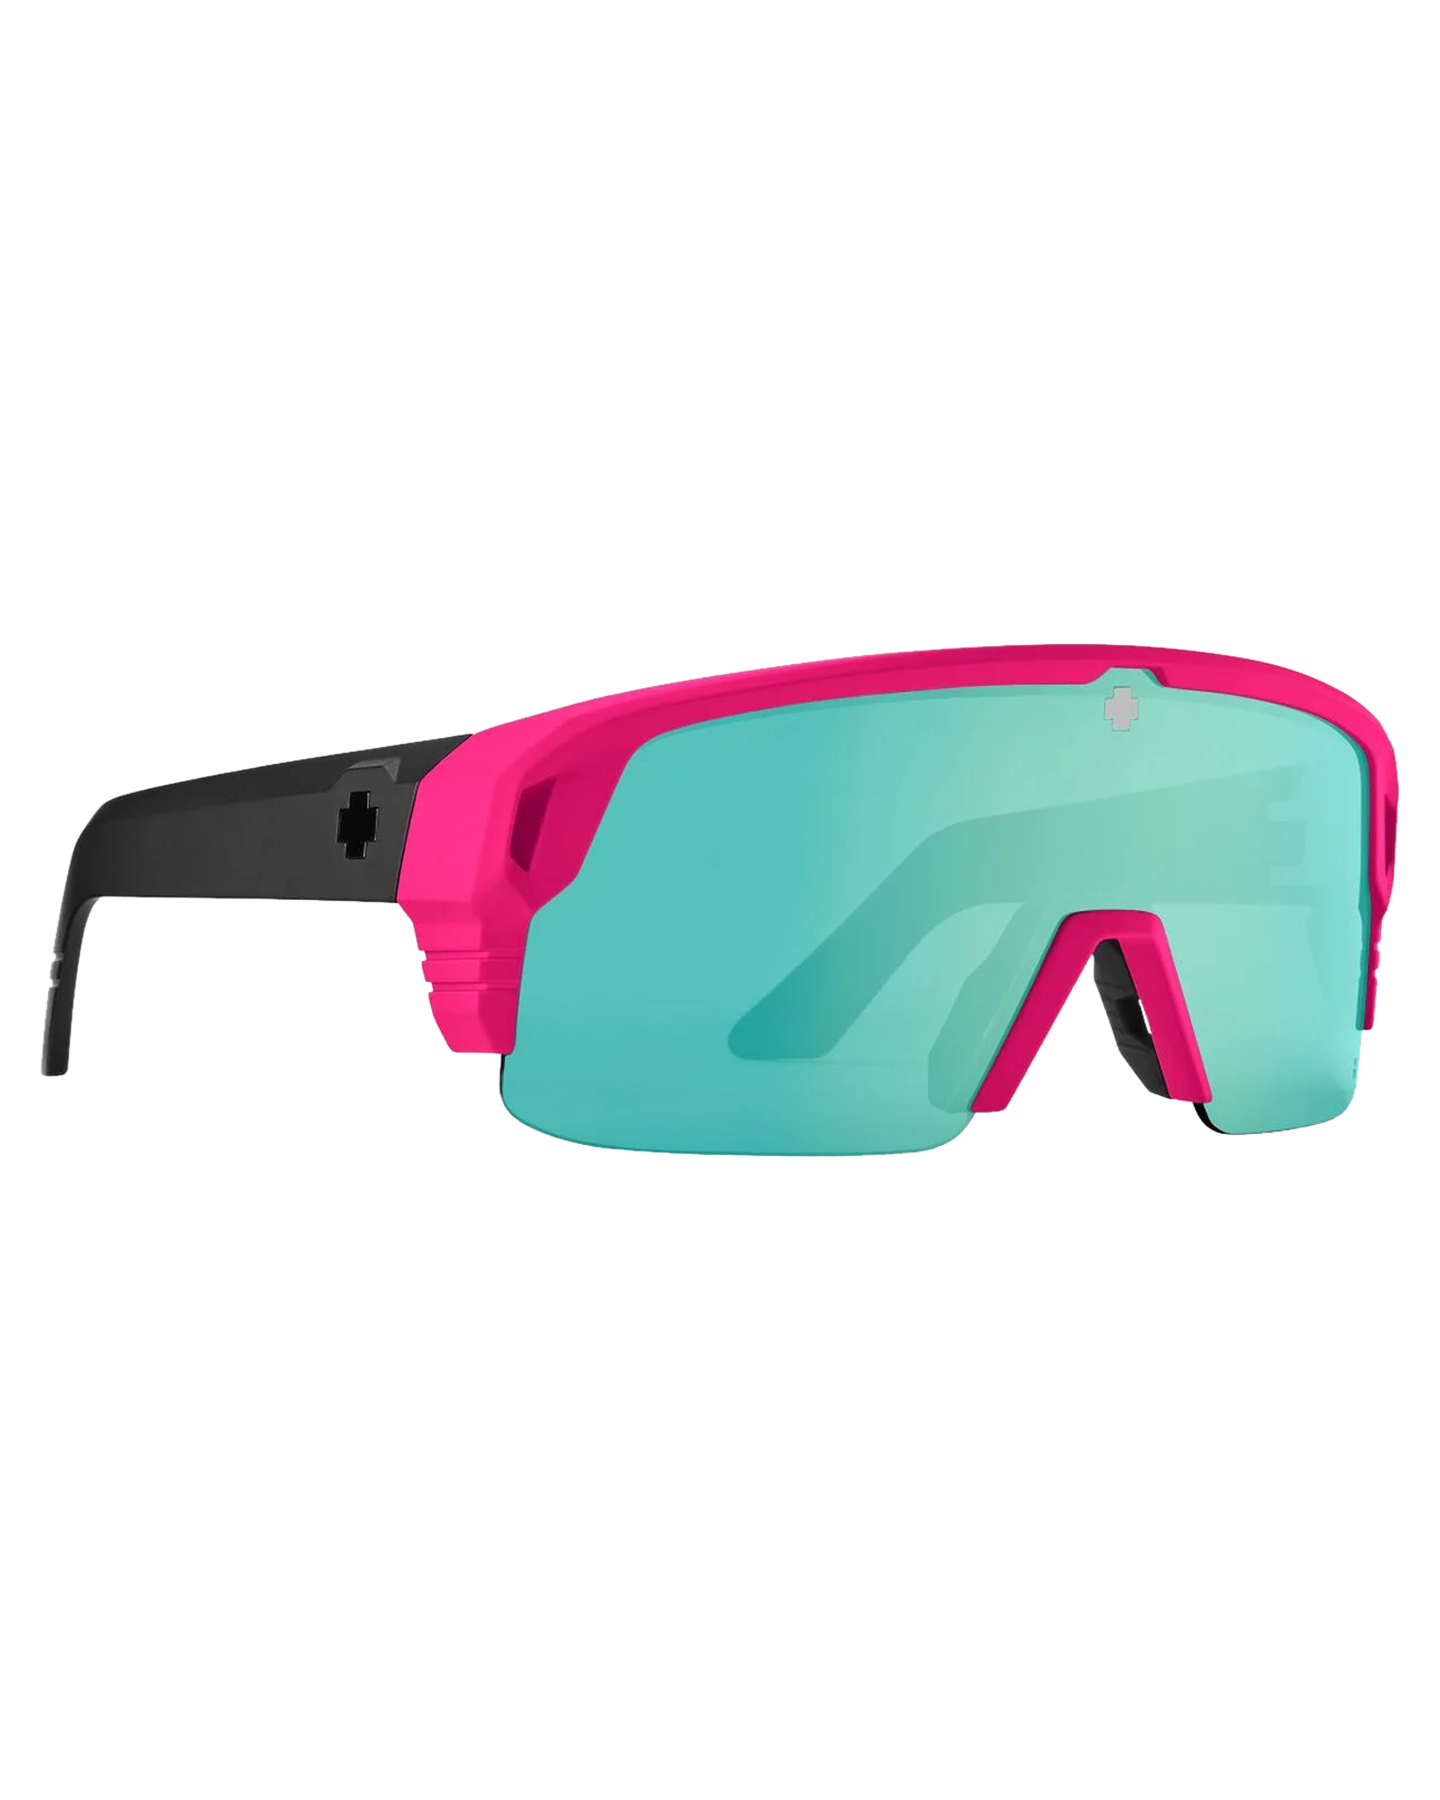 Spy Monolith 5050 Matte Neon Pink  - Happy Bronze Light Green Spectra Mirror Sunglasses - SnowSkiersWarehouse